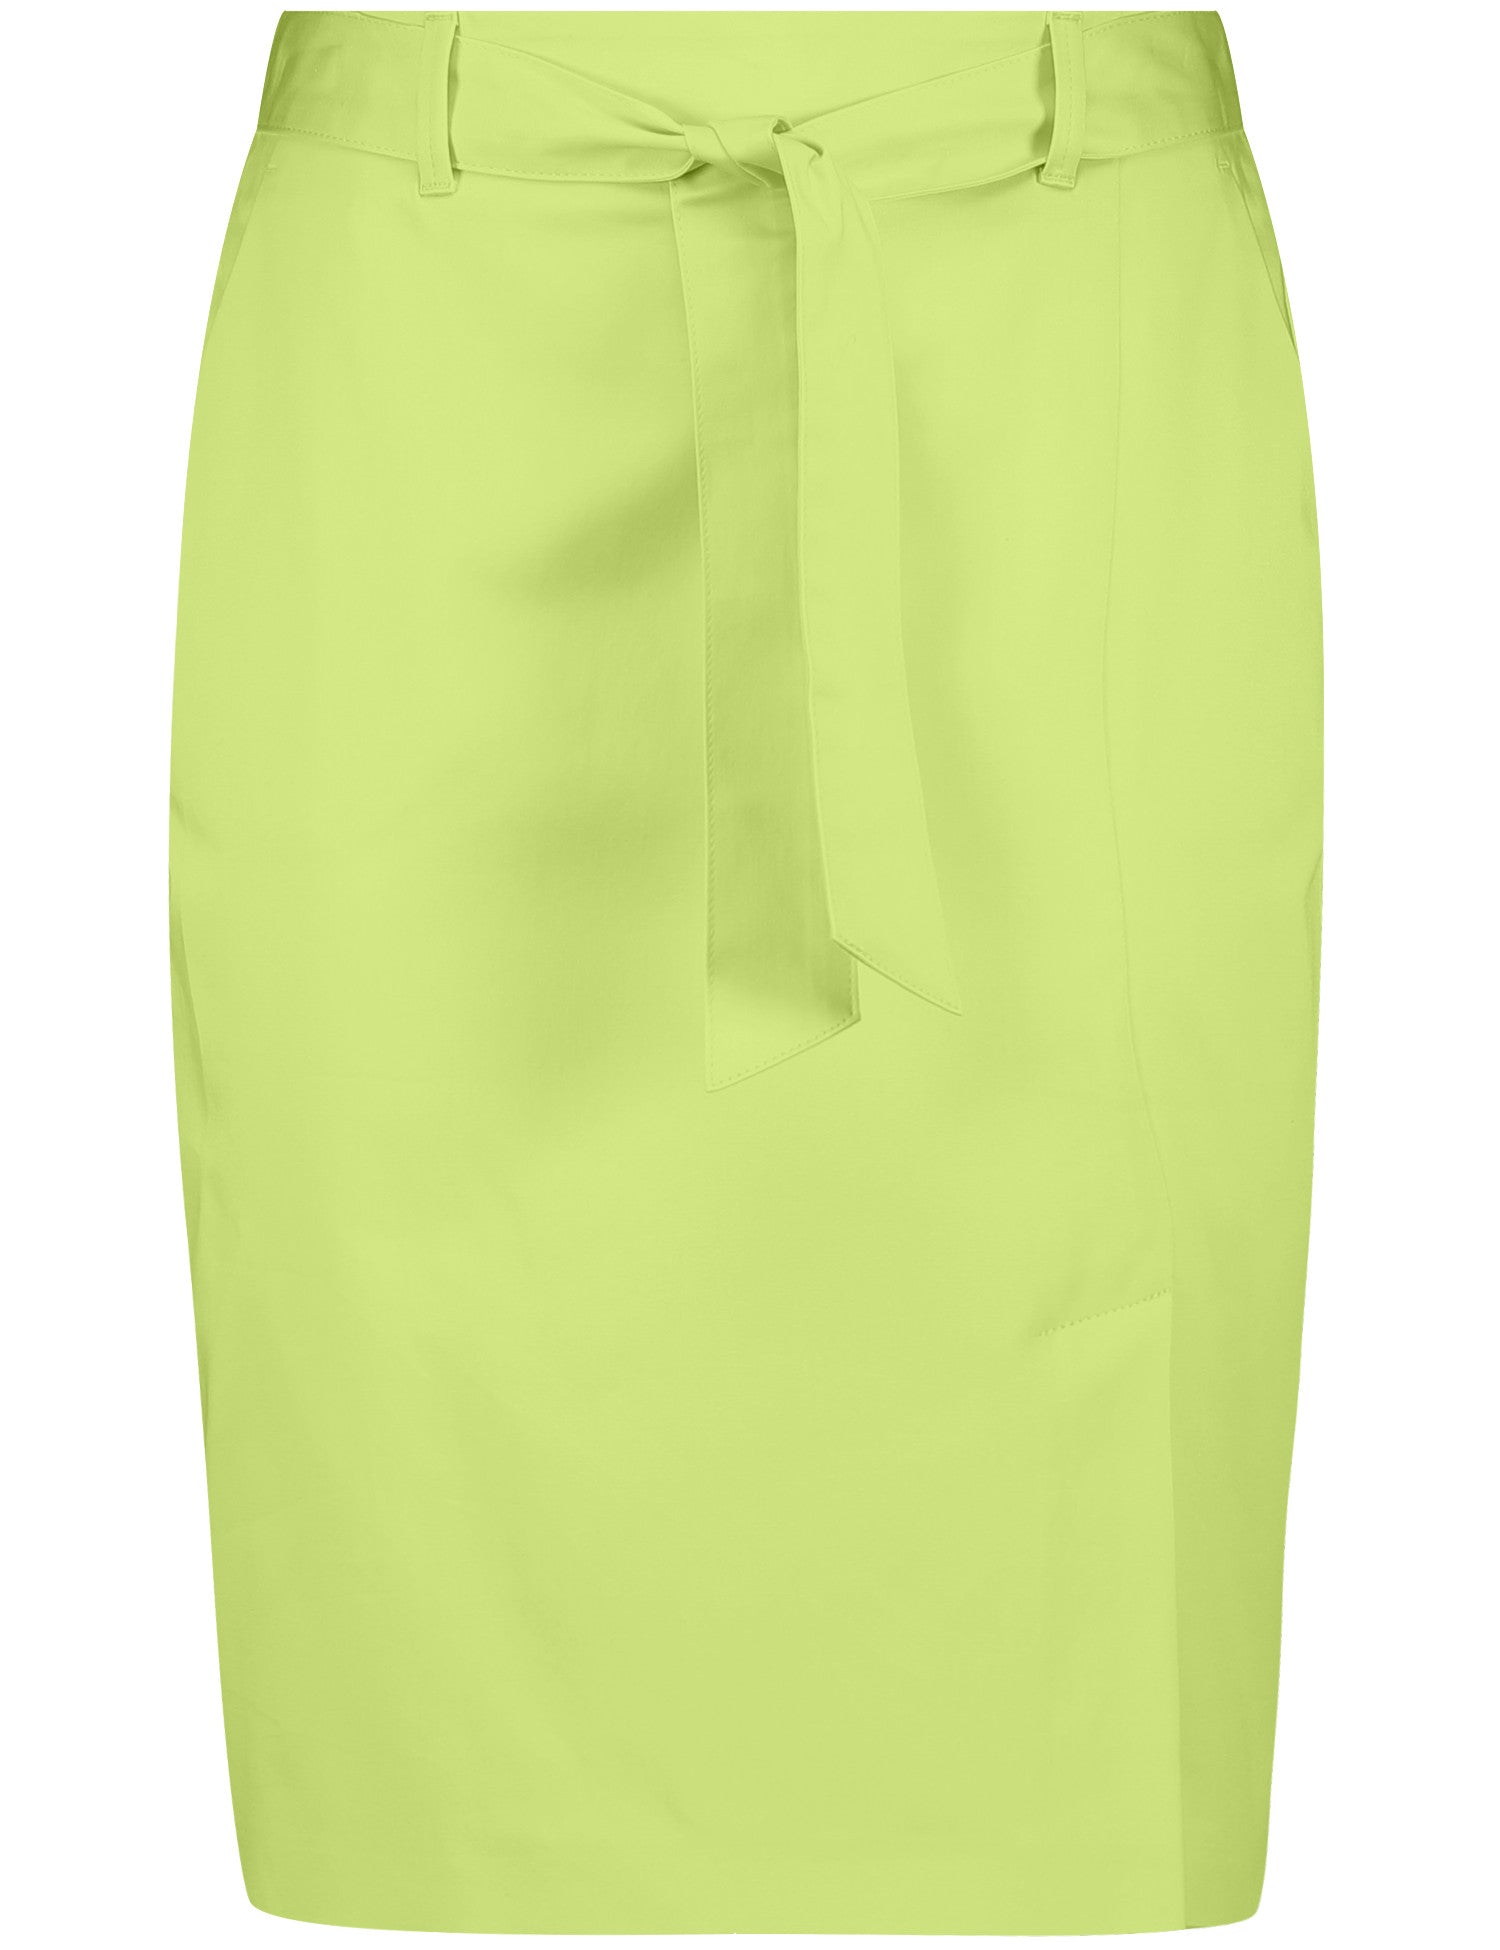 Gerry Weber Lime skirt